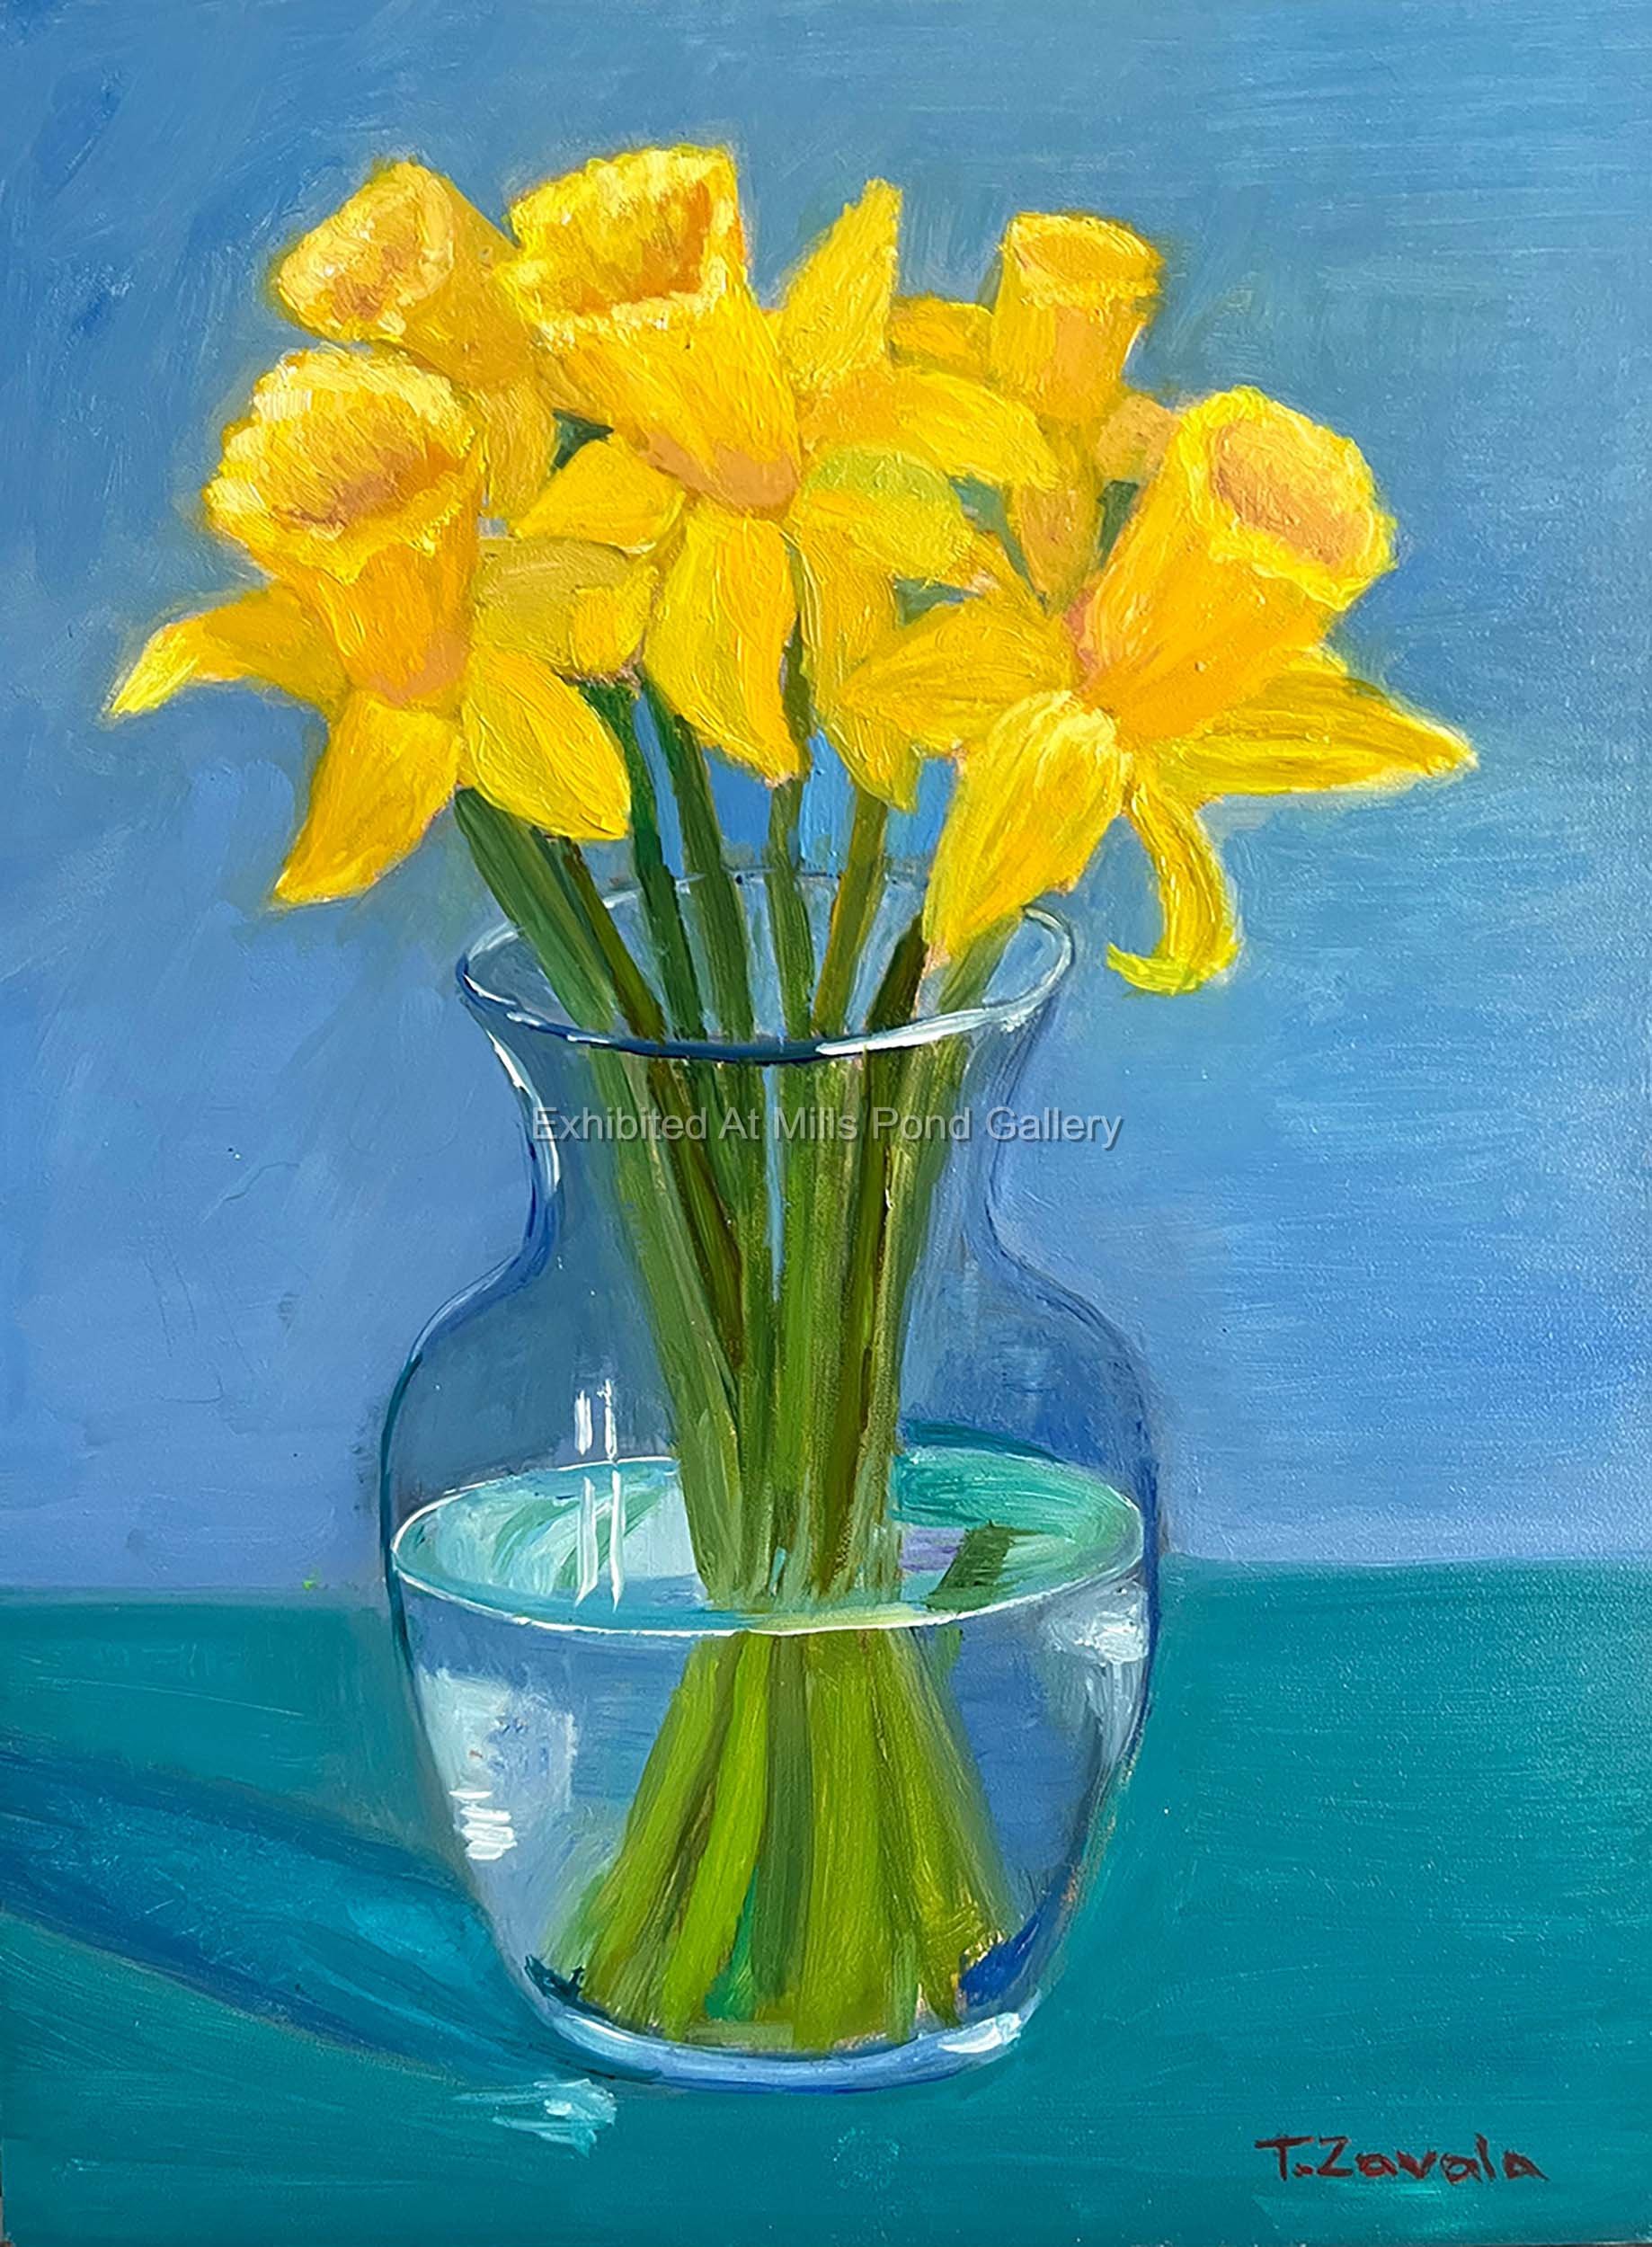 Theodora Zavala-Daffodil Delight-Oil.jpg